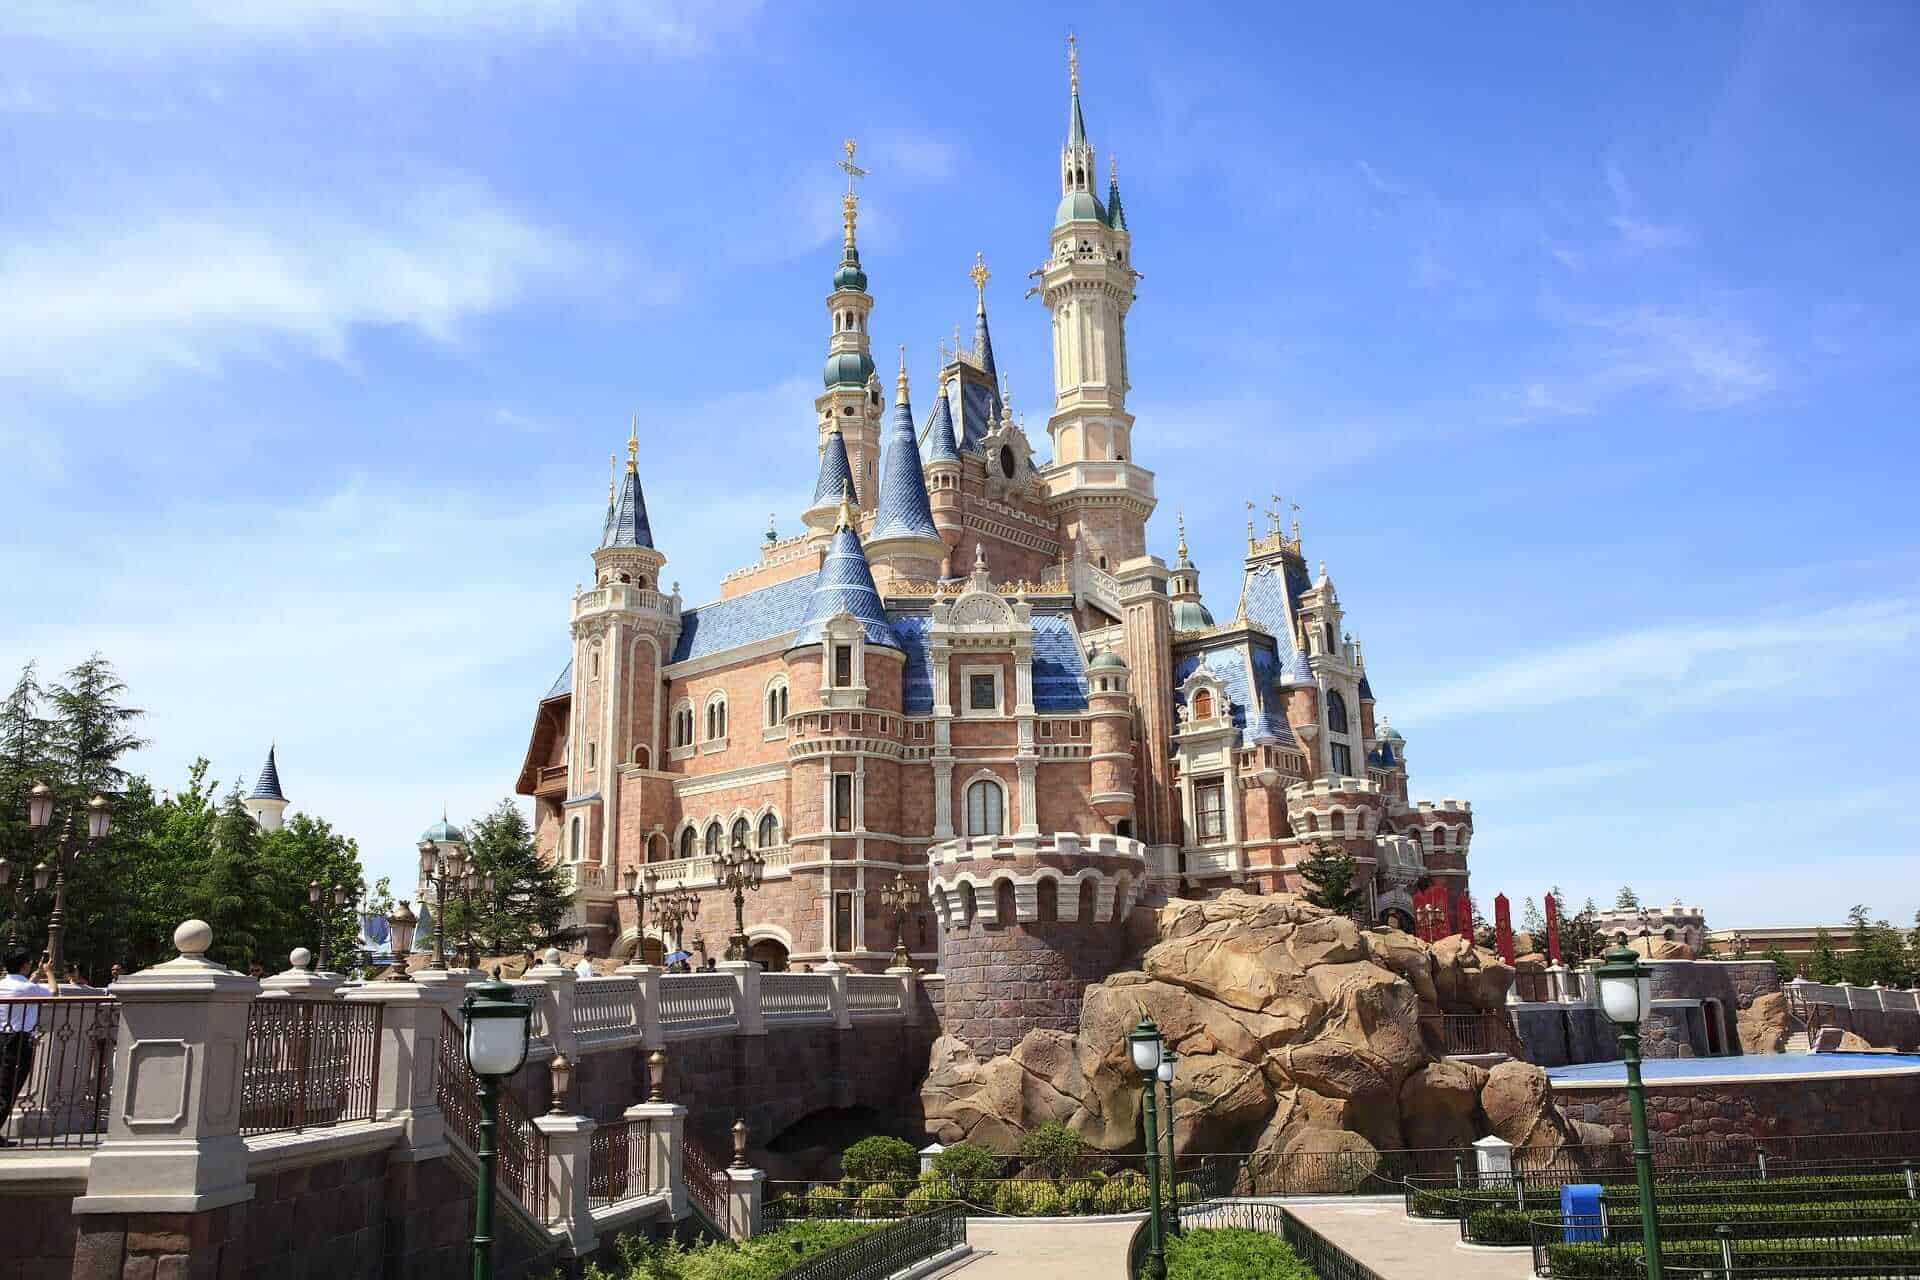 Shanghai Disney Castle